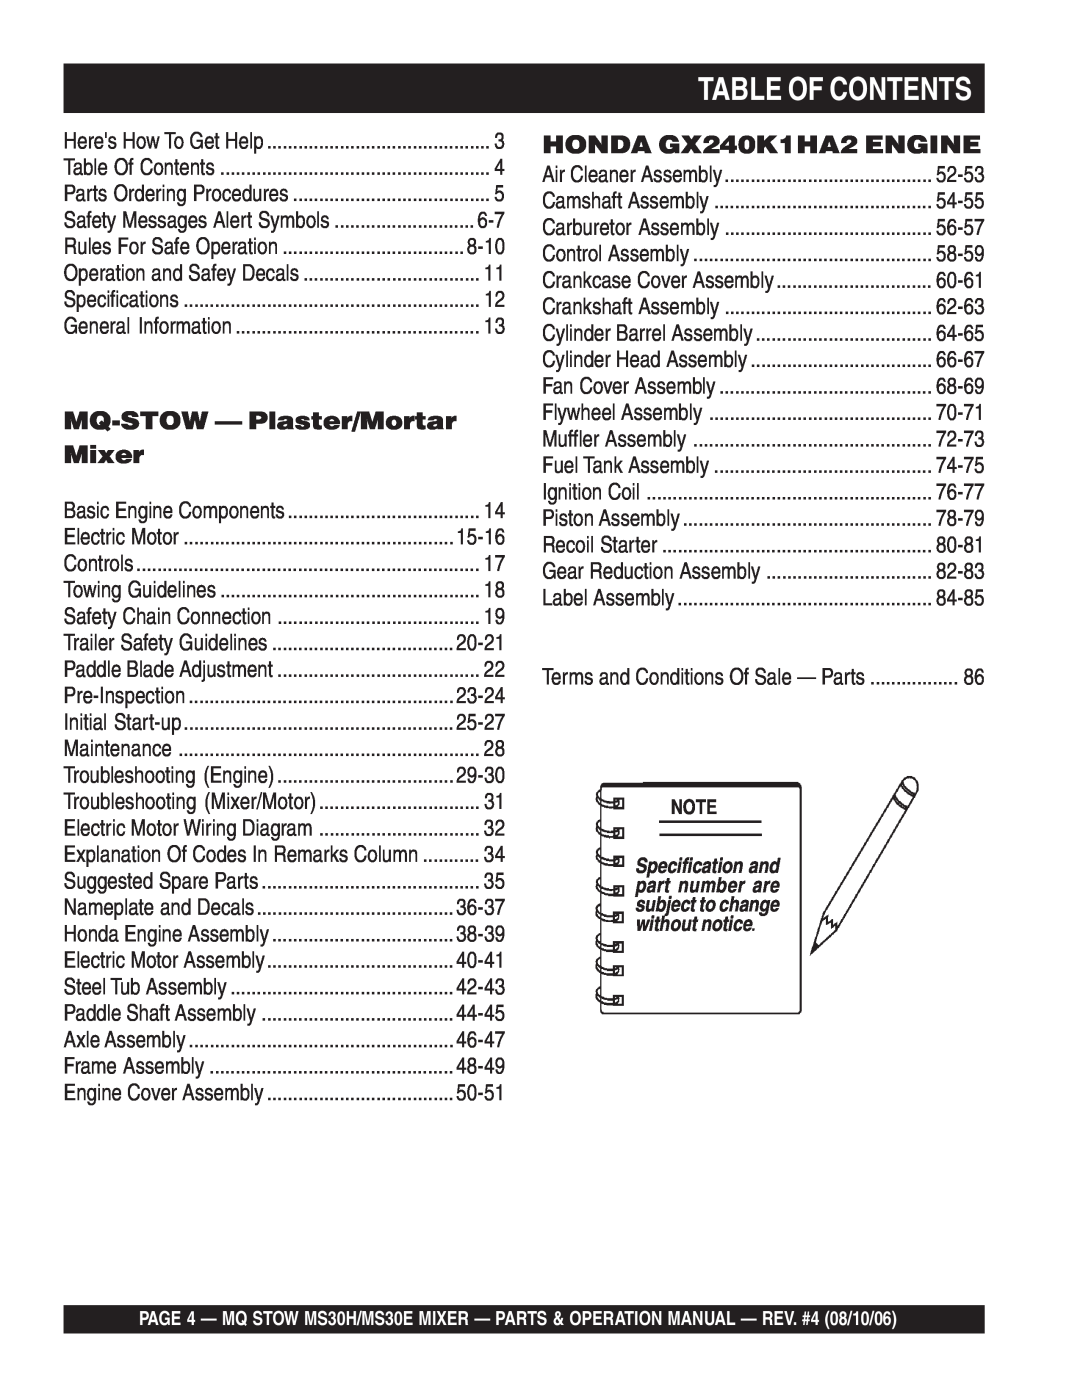 Sonic Alert MS30E, MS30H manual Table Of Contents, MQ-STOW - Plaster/Mortar Mixer, HONDA GX240K1HA2 ENGINE 